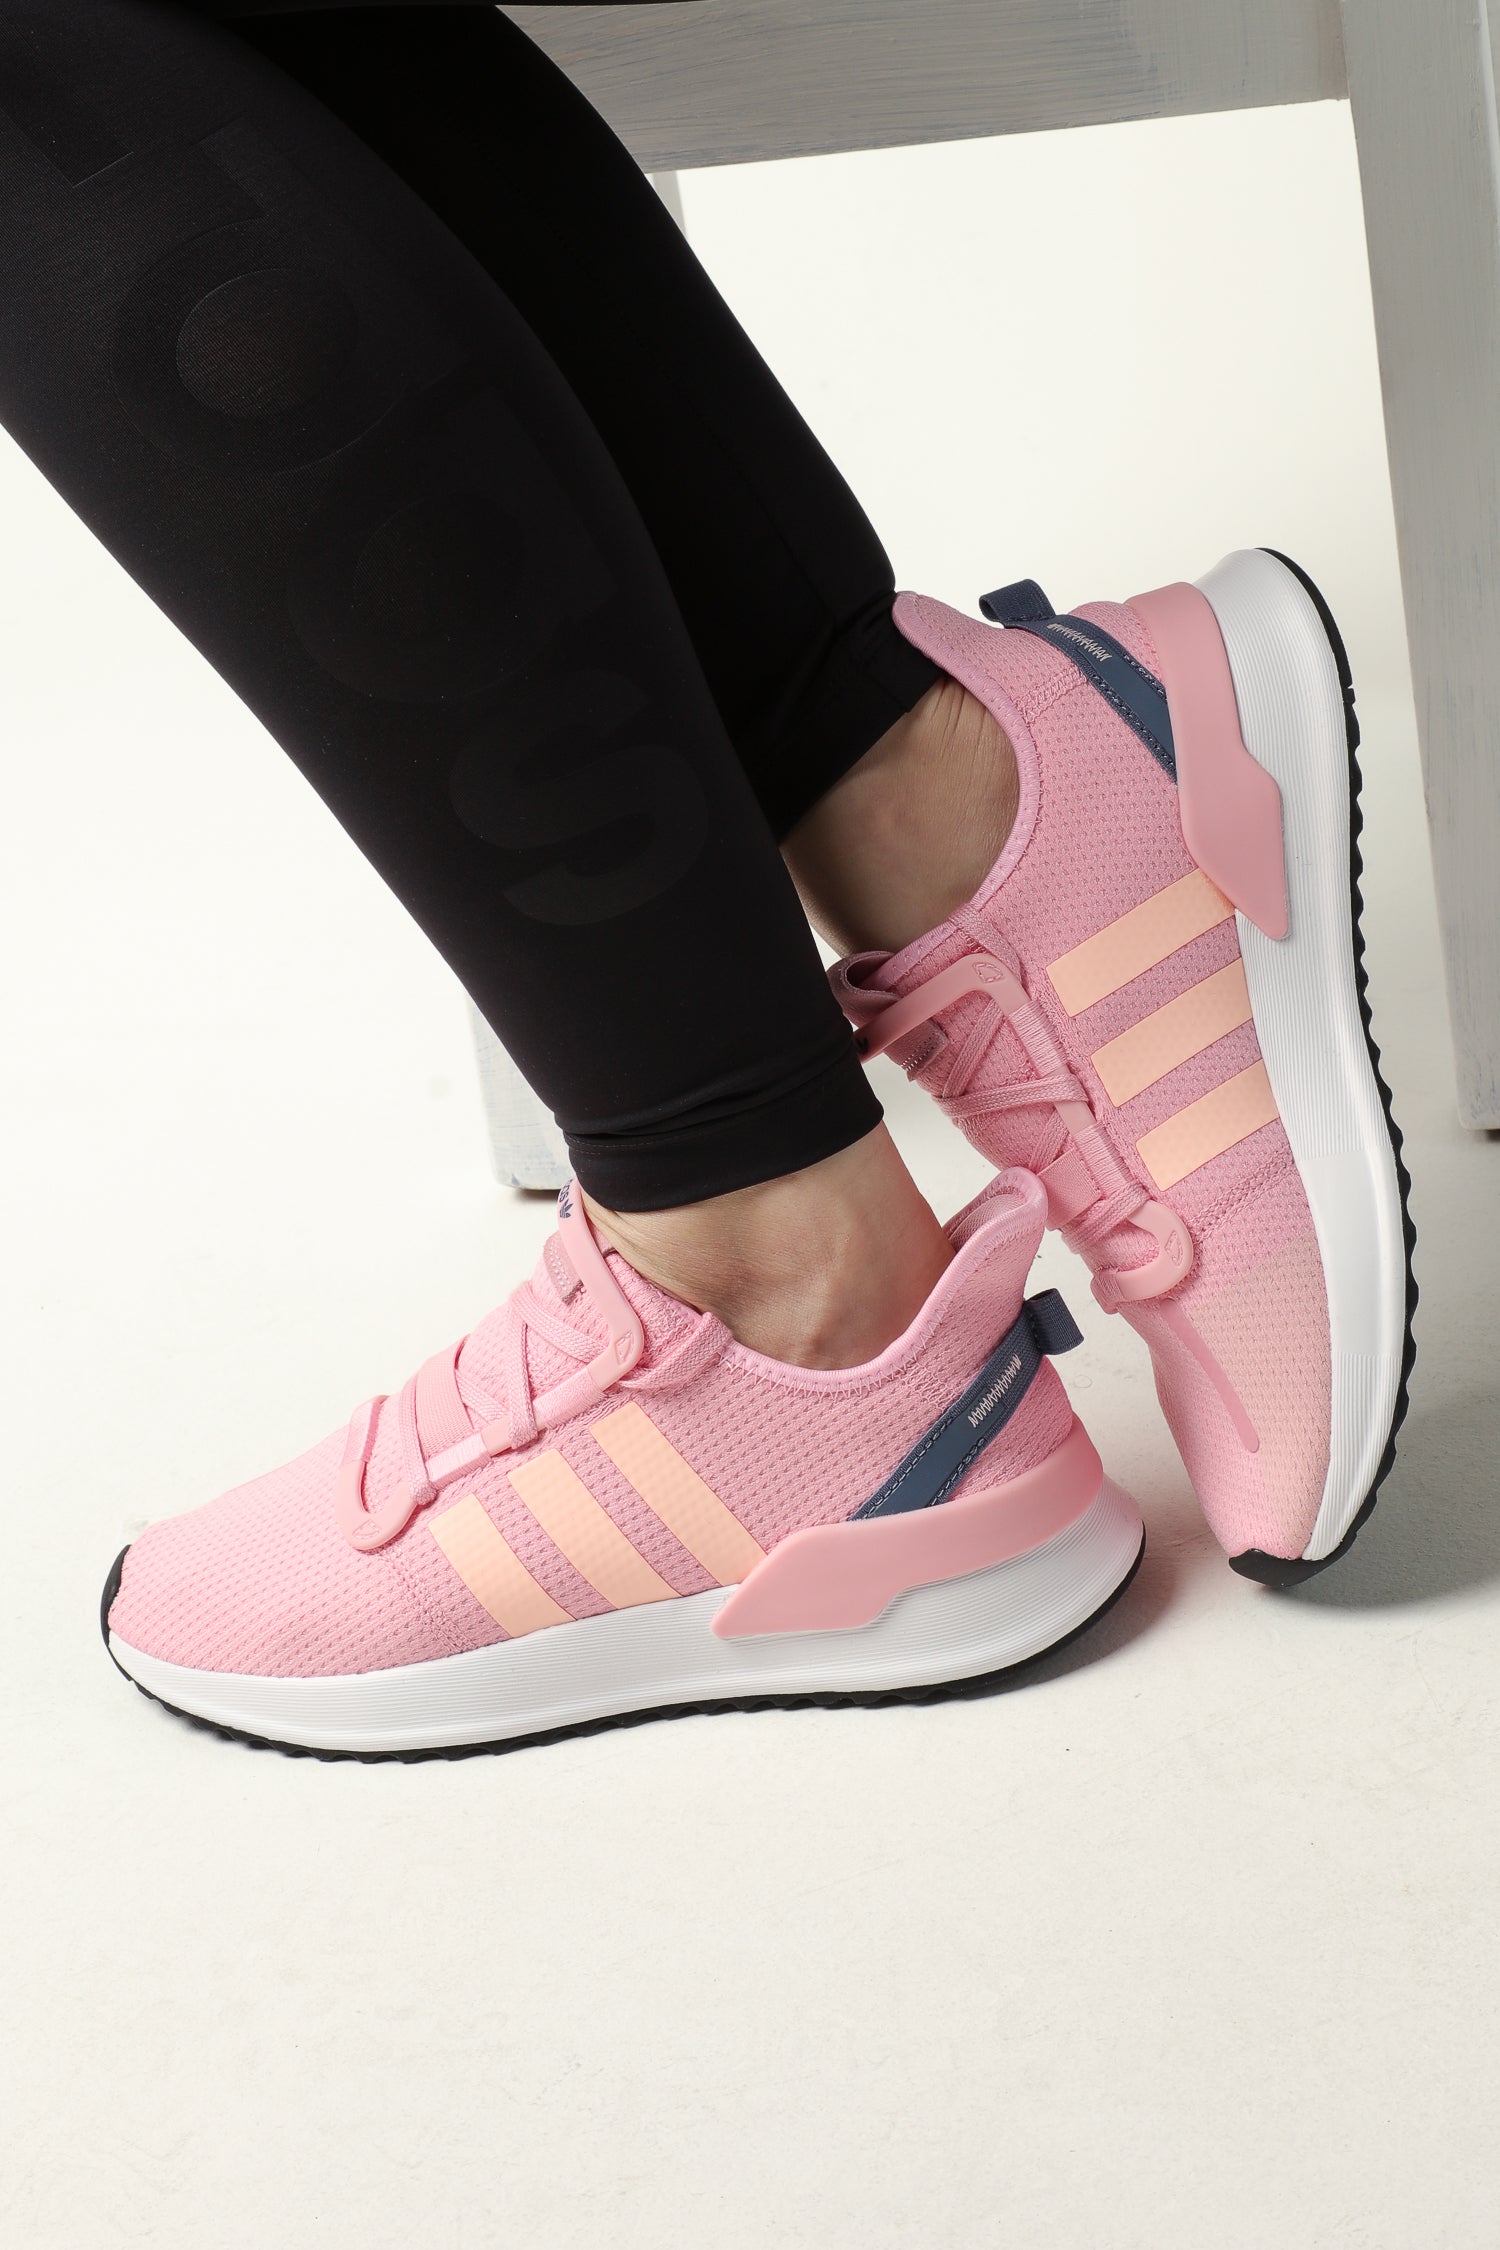 adidas u_path run pink